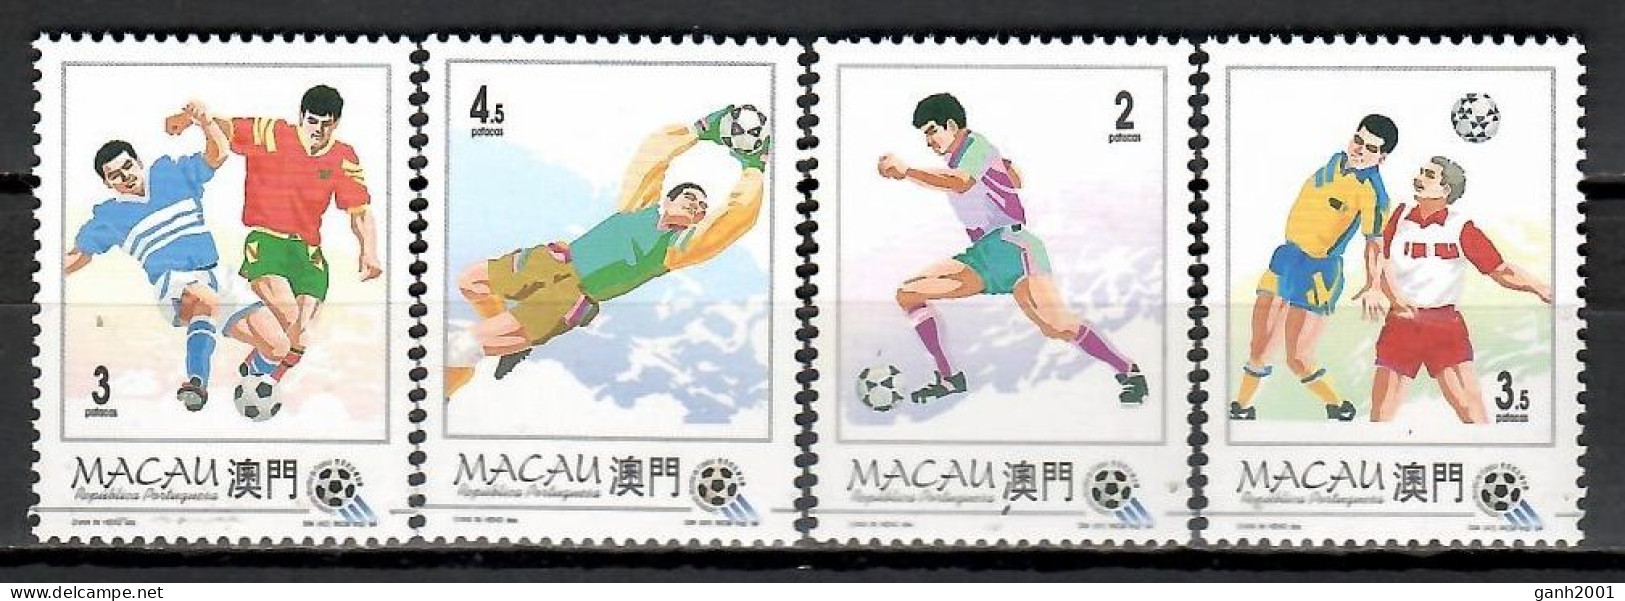 Macau 1994 / Football Soccer FIFA World Cup USA MNH Futbol / Cu10922  C5-28 - 1994 – Estados Unidos